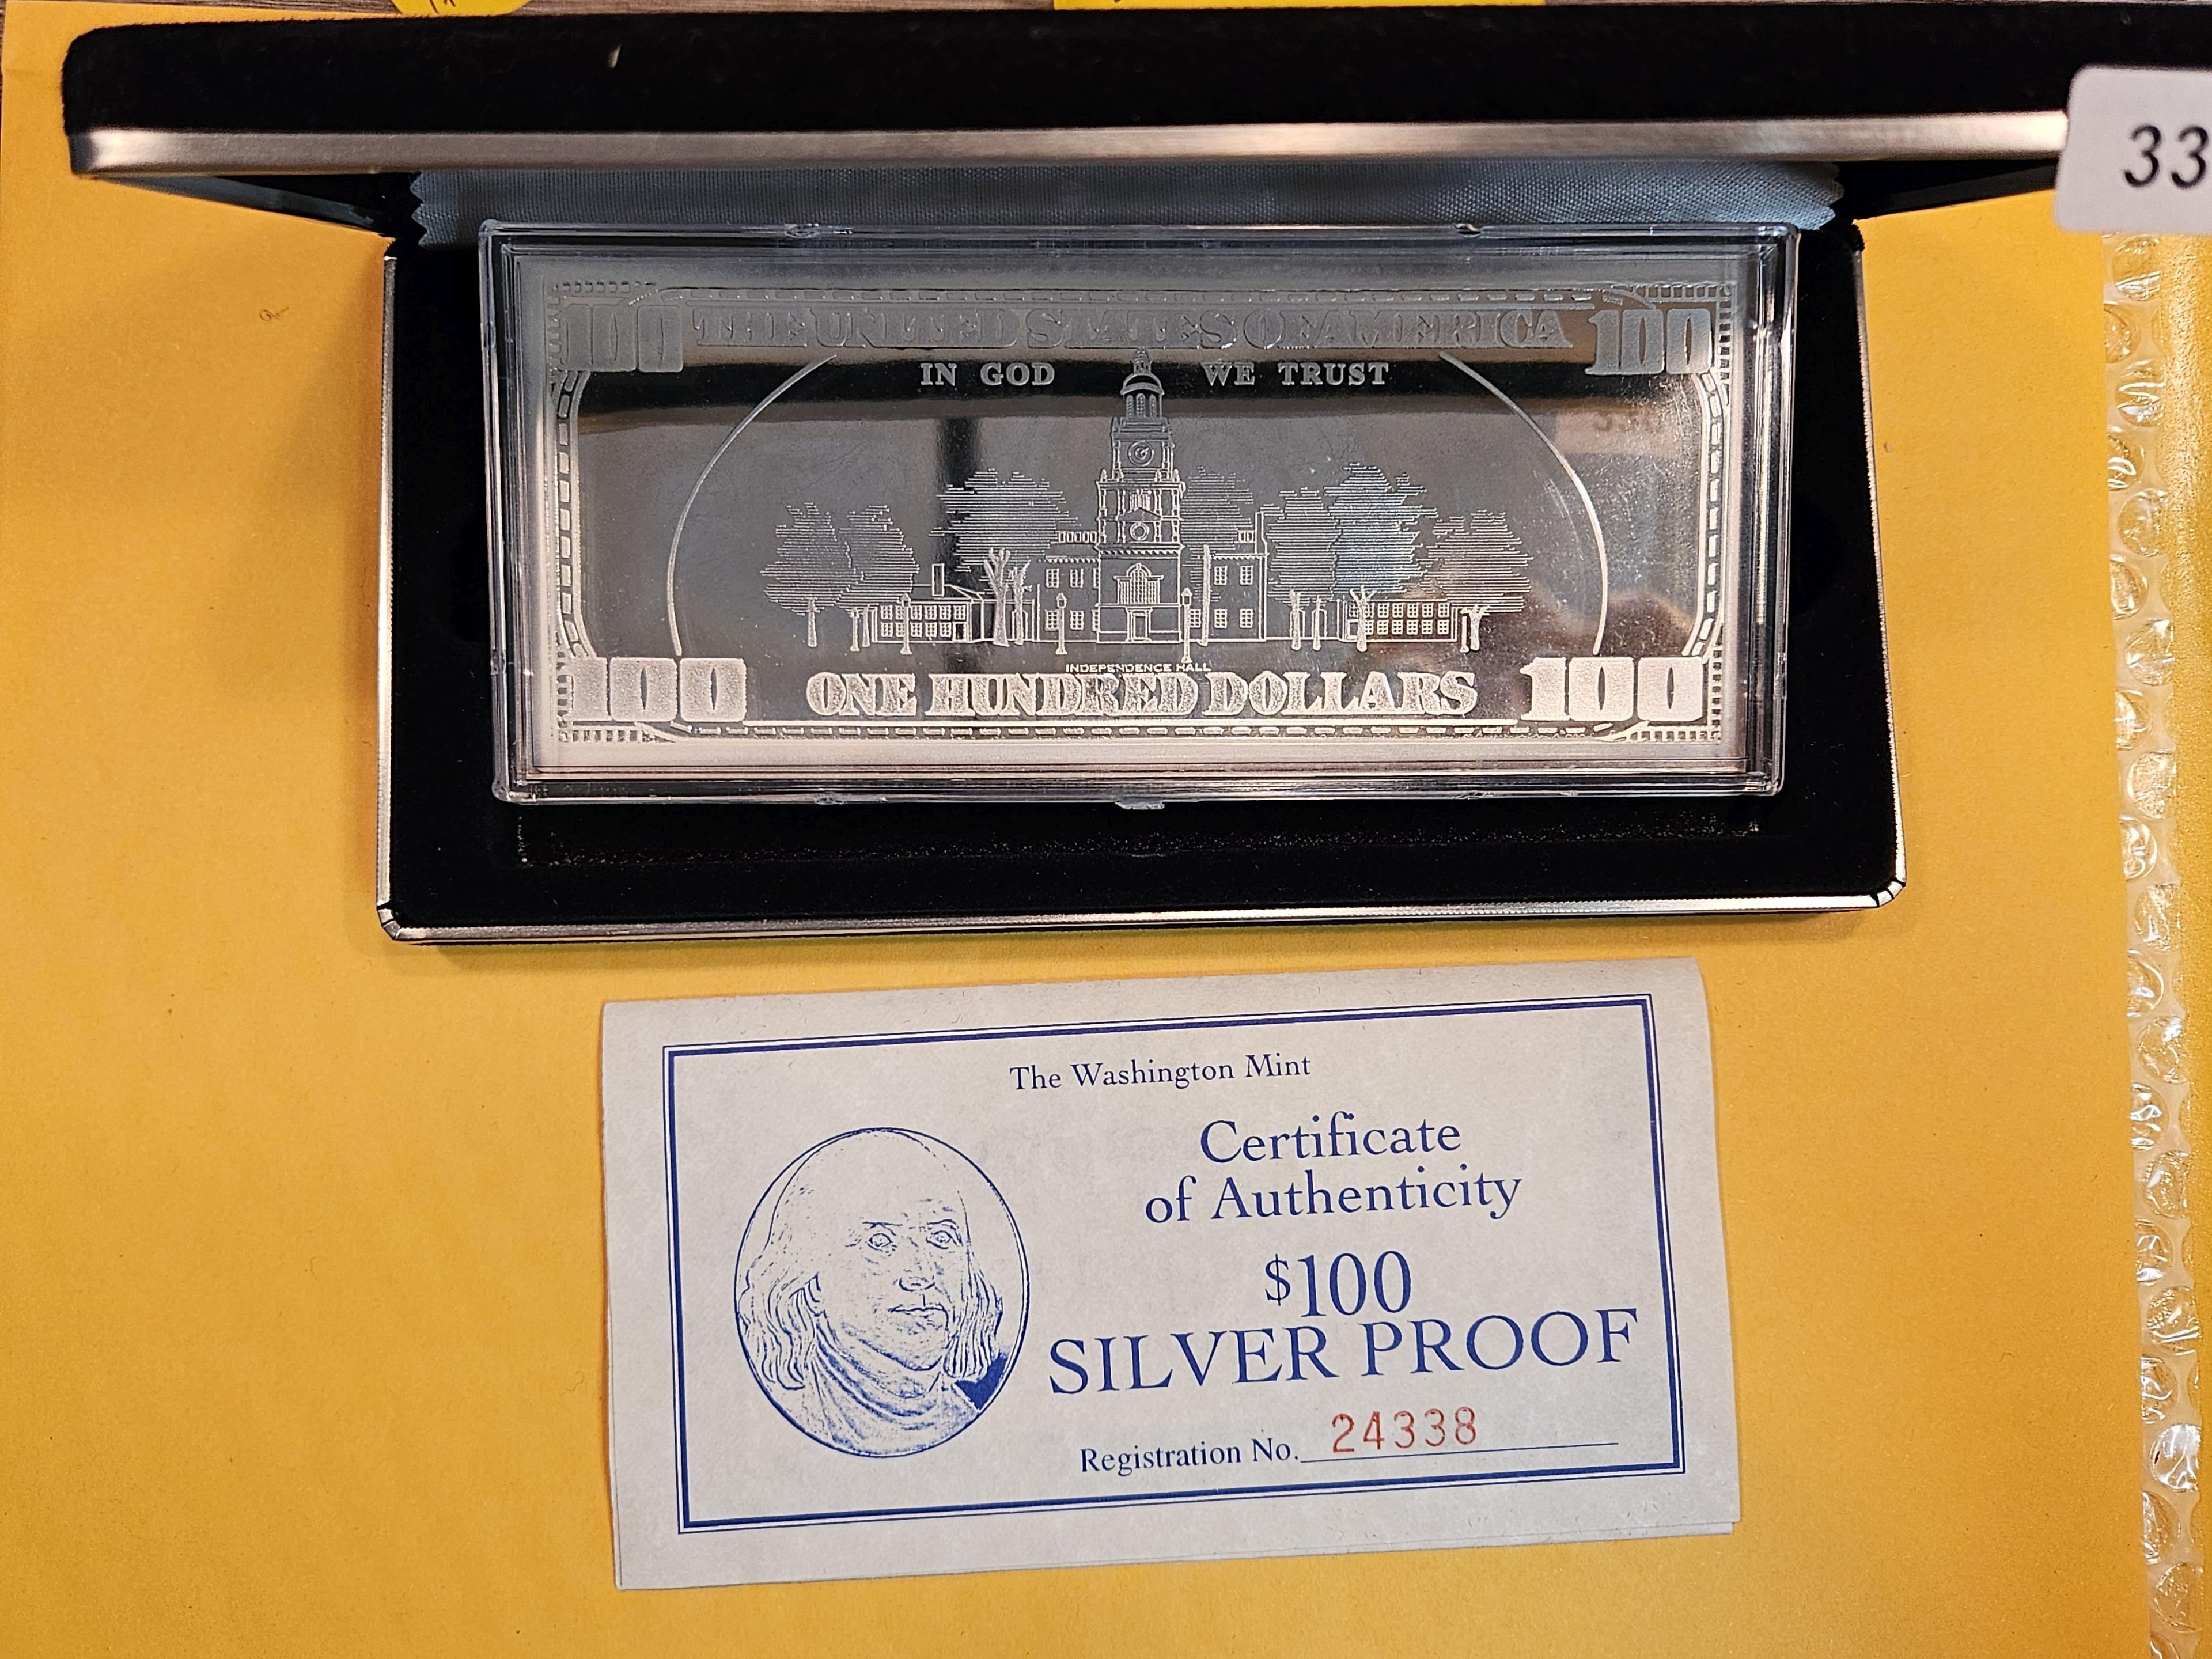 One-Quarter Pound .999 fine silver Proof art bar